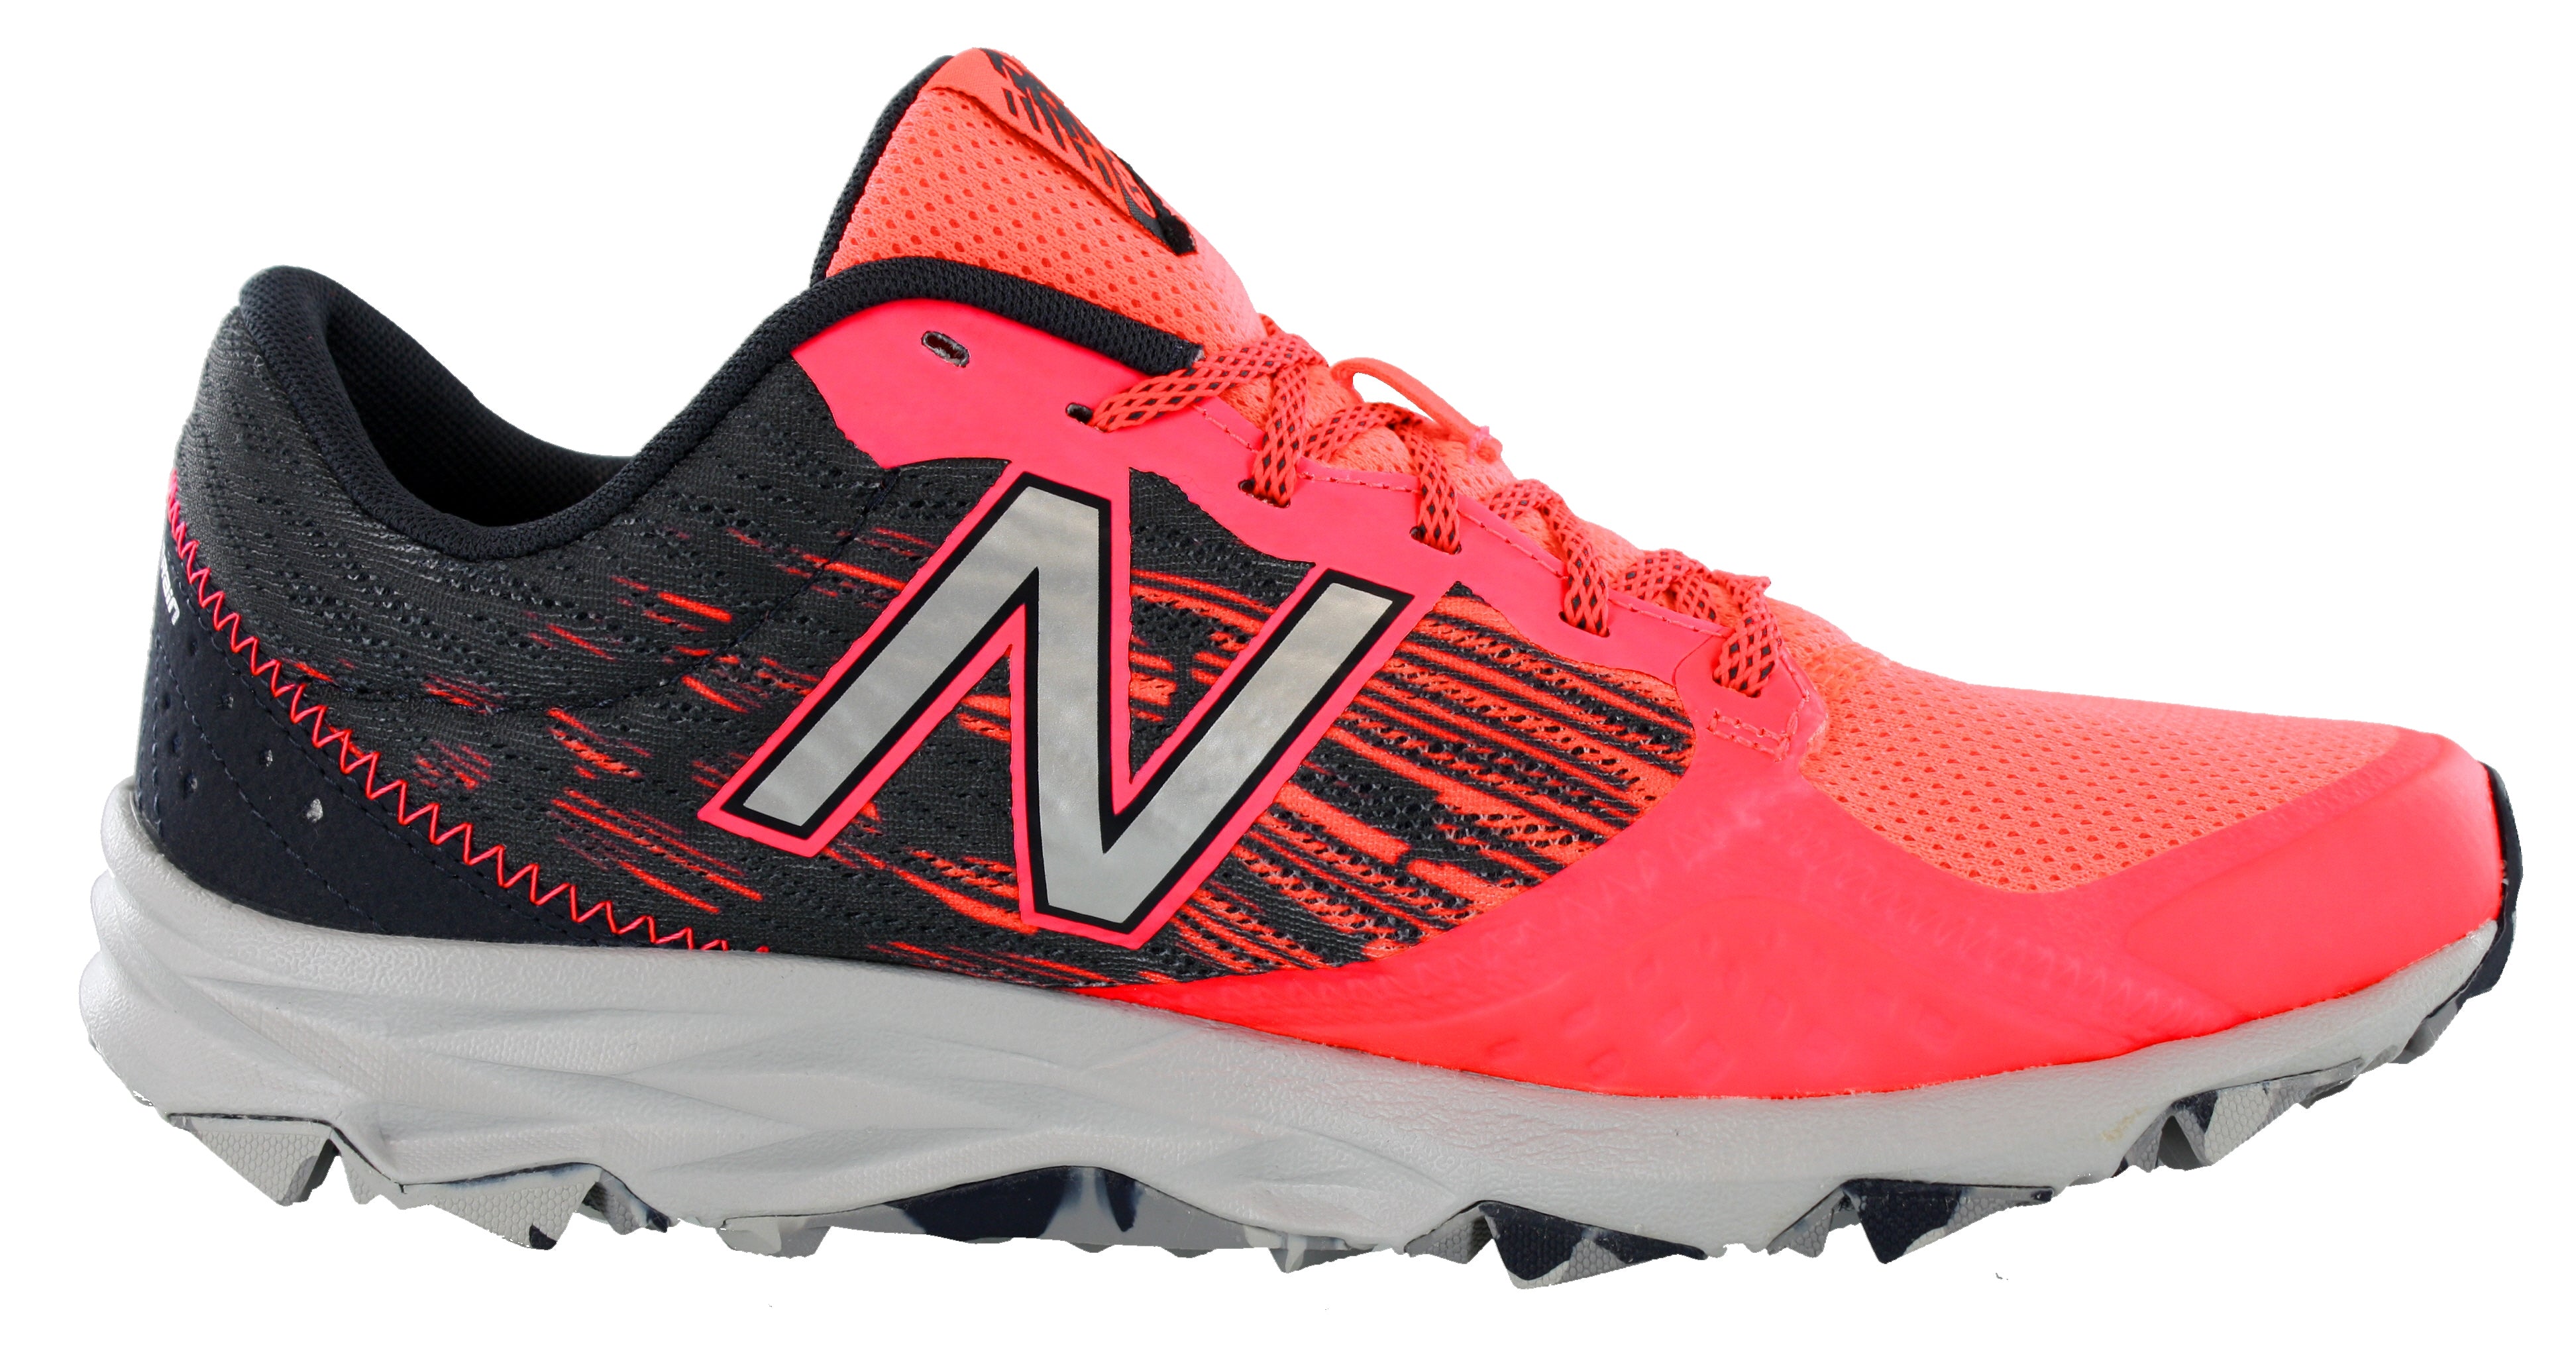 Womens  Healthdesign? - zapatillas de running New Balance hombre  entrenamiento trail neutro talla 47 amarillas - New Balance 990v4 Mercury  Red